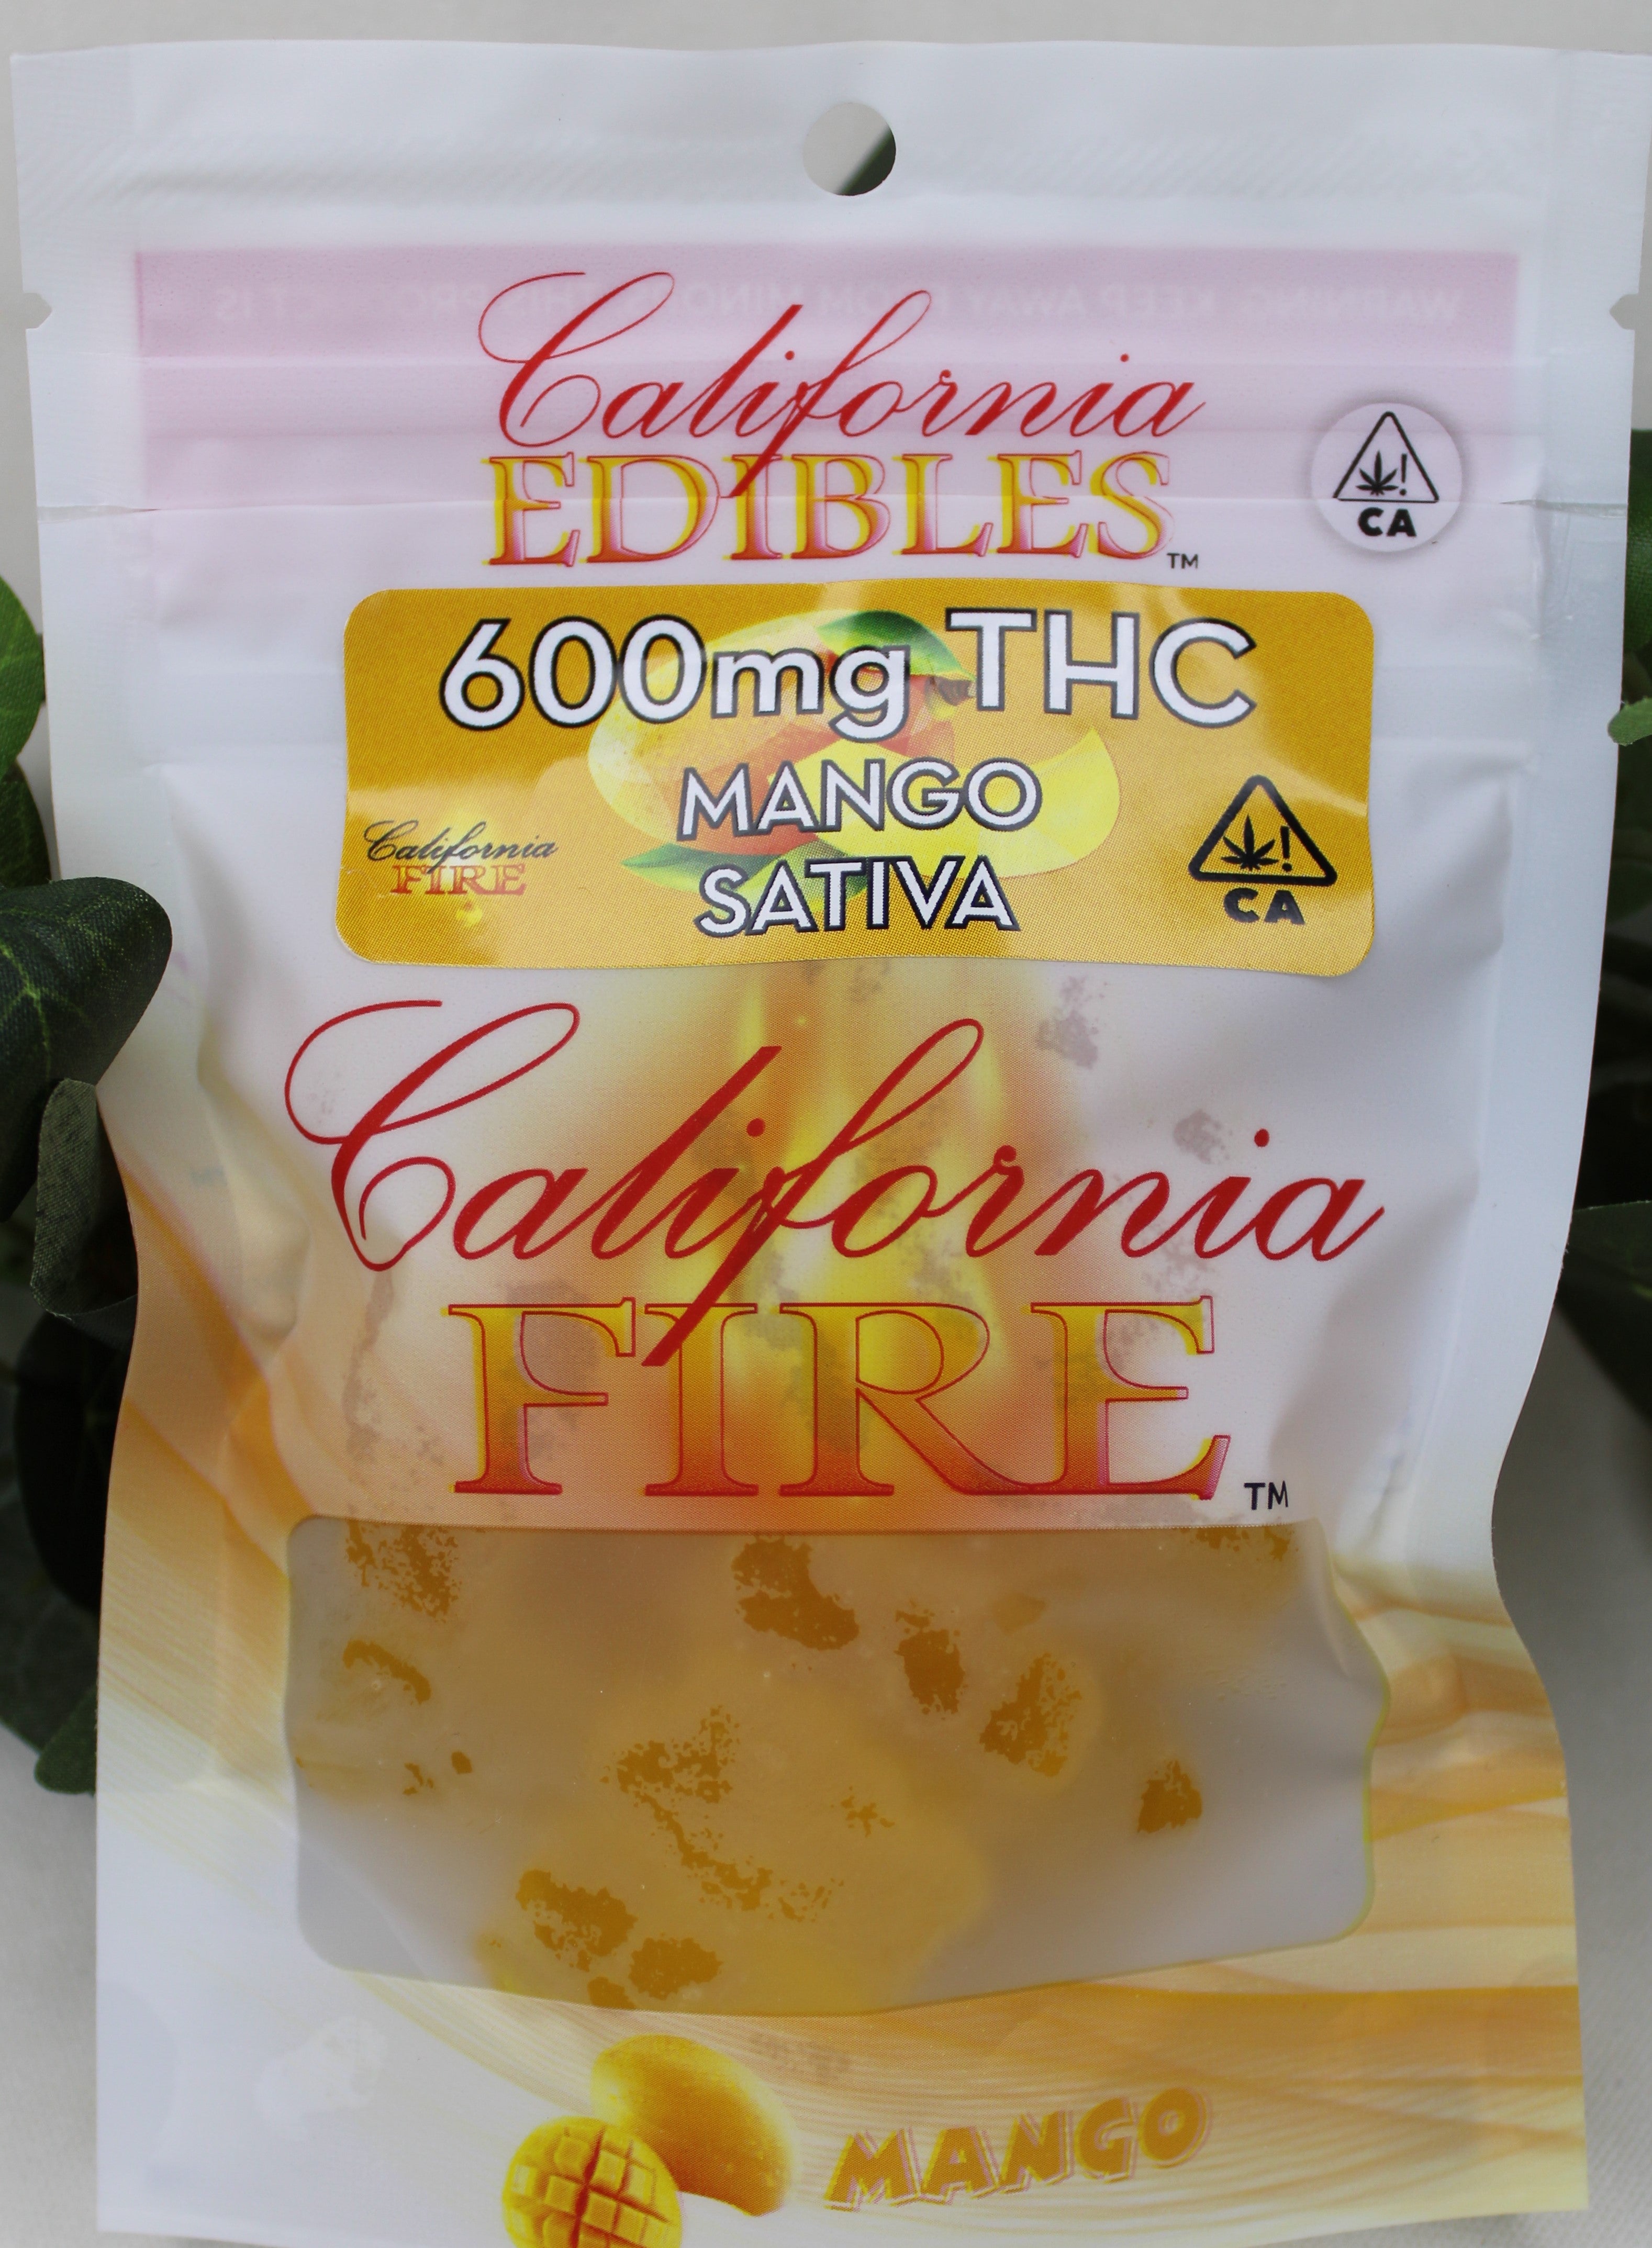 California Fire 600mg "MANGO" THC Edible